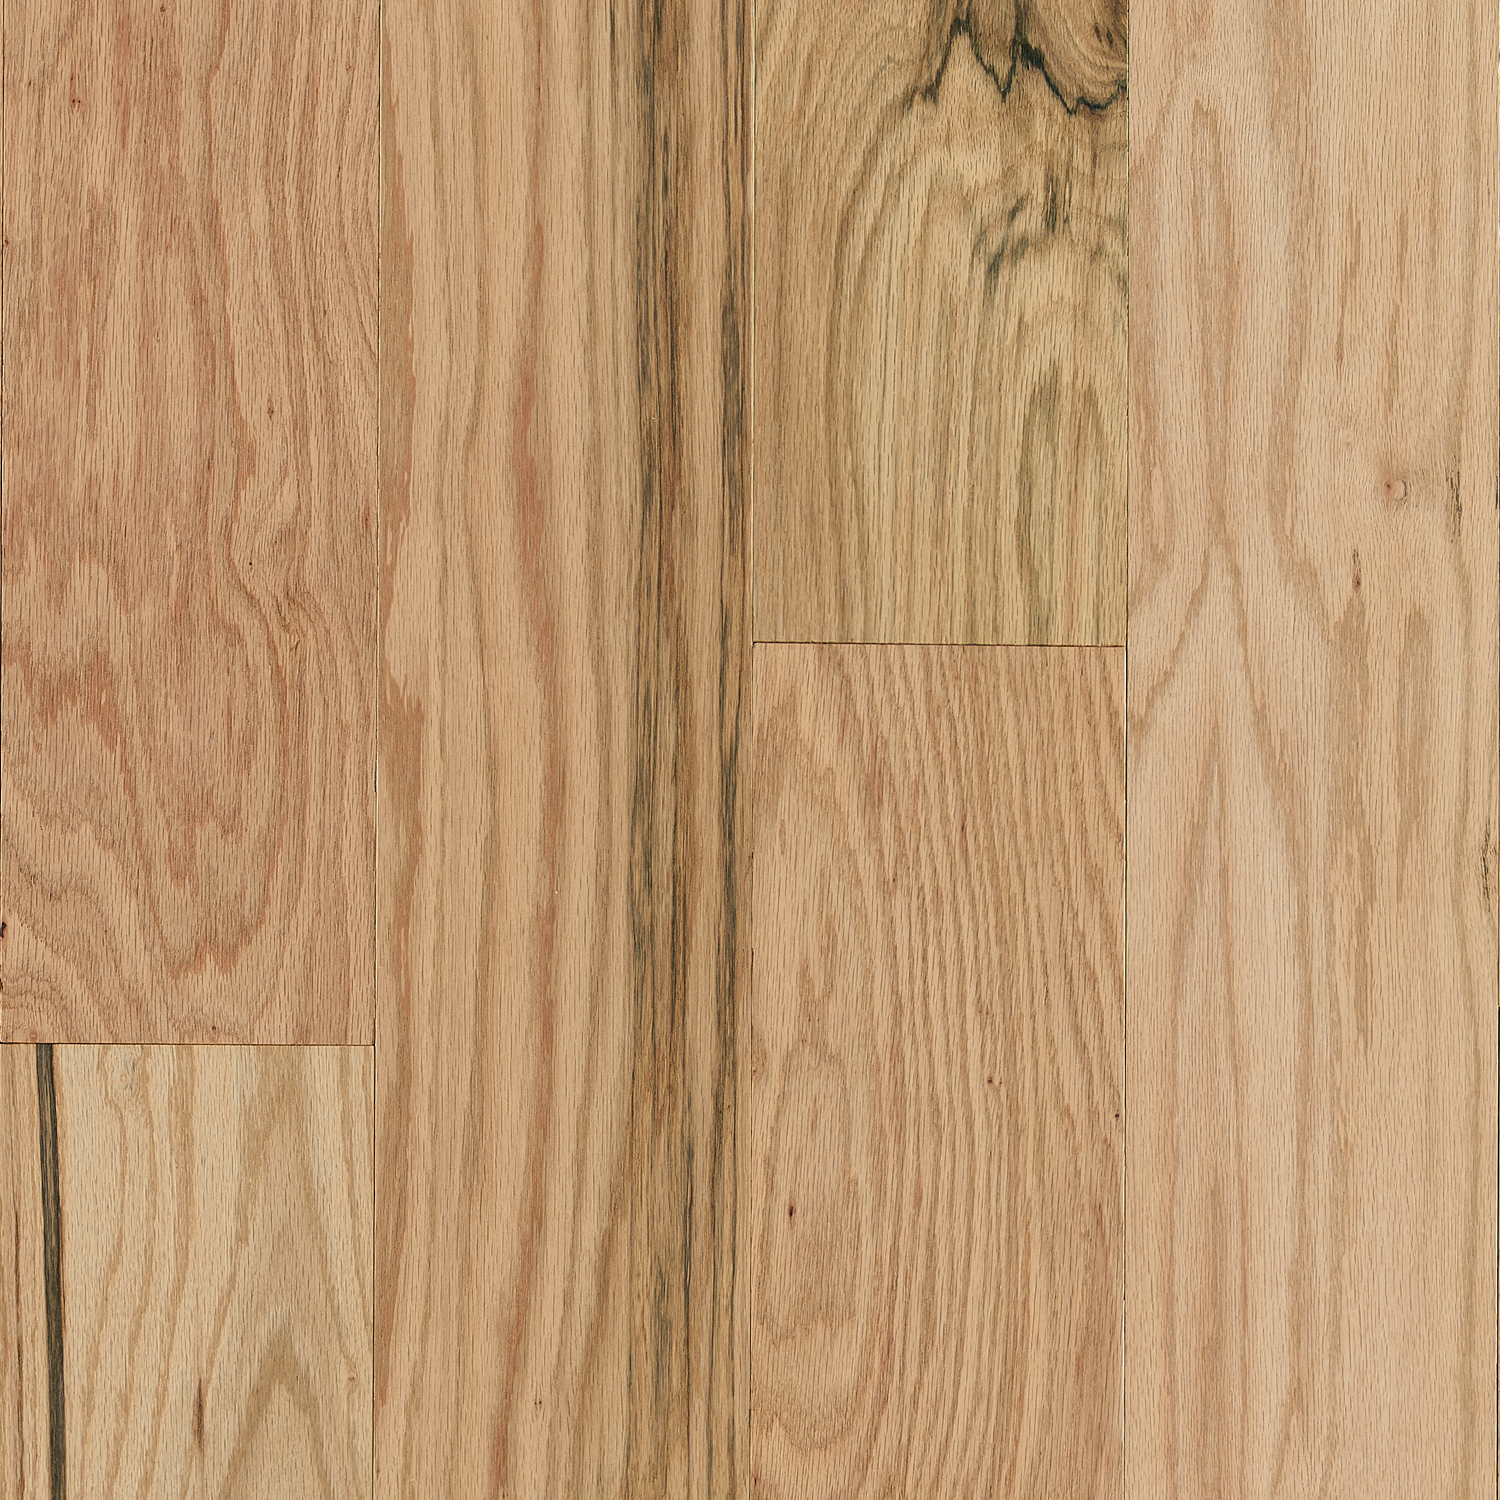 Red Oak Engineered Hardwood Ekah72l01see, 6 Inch Hardwood Flooring